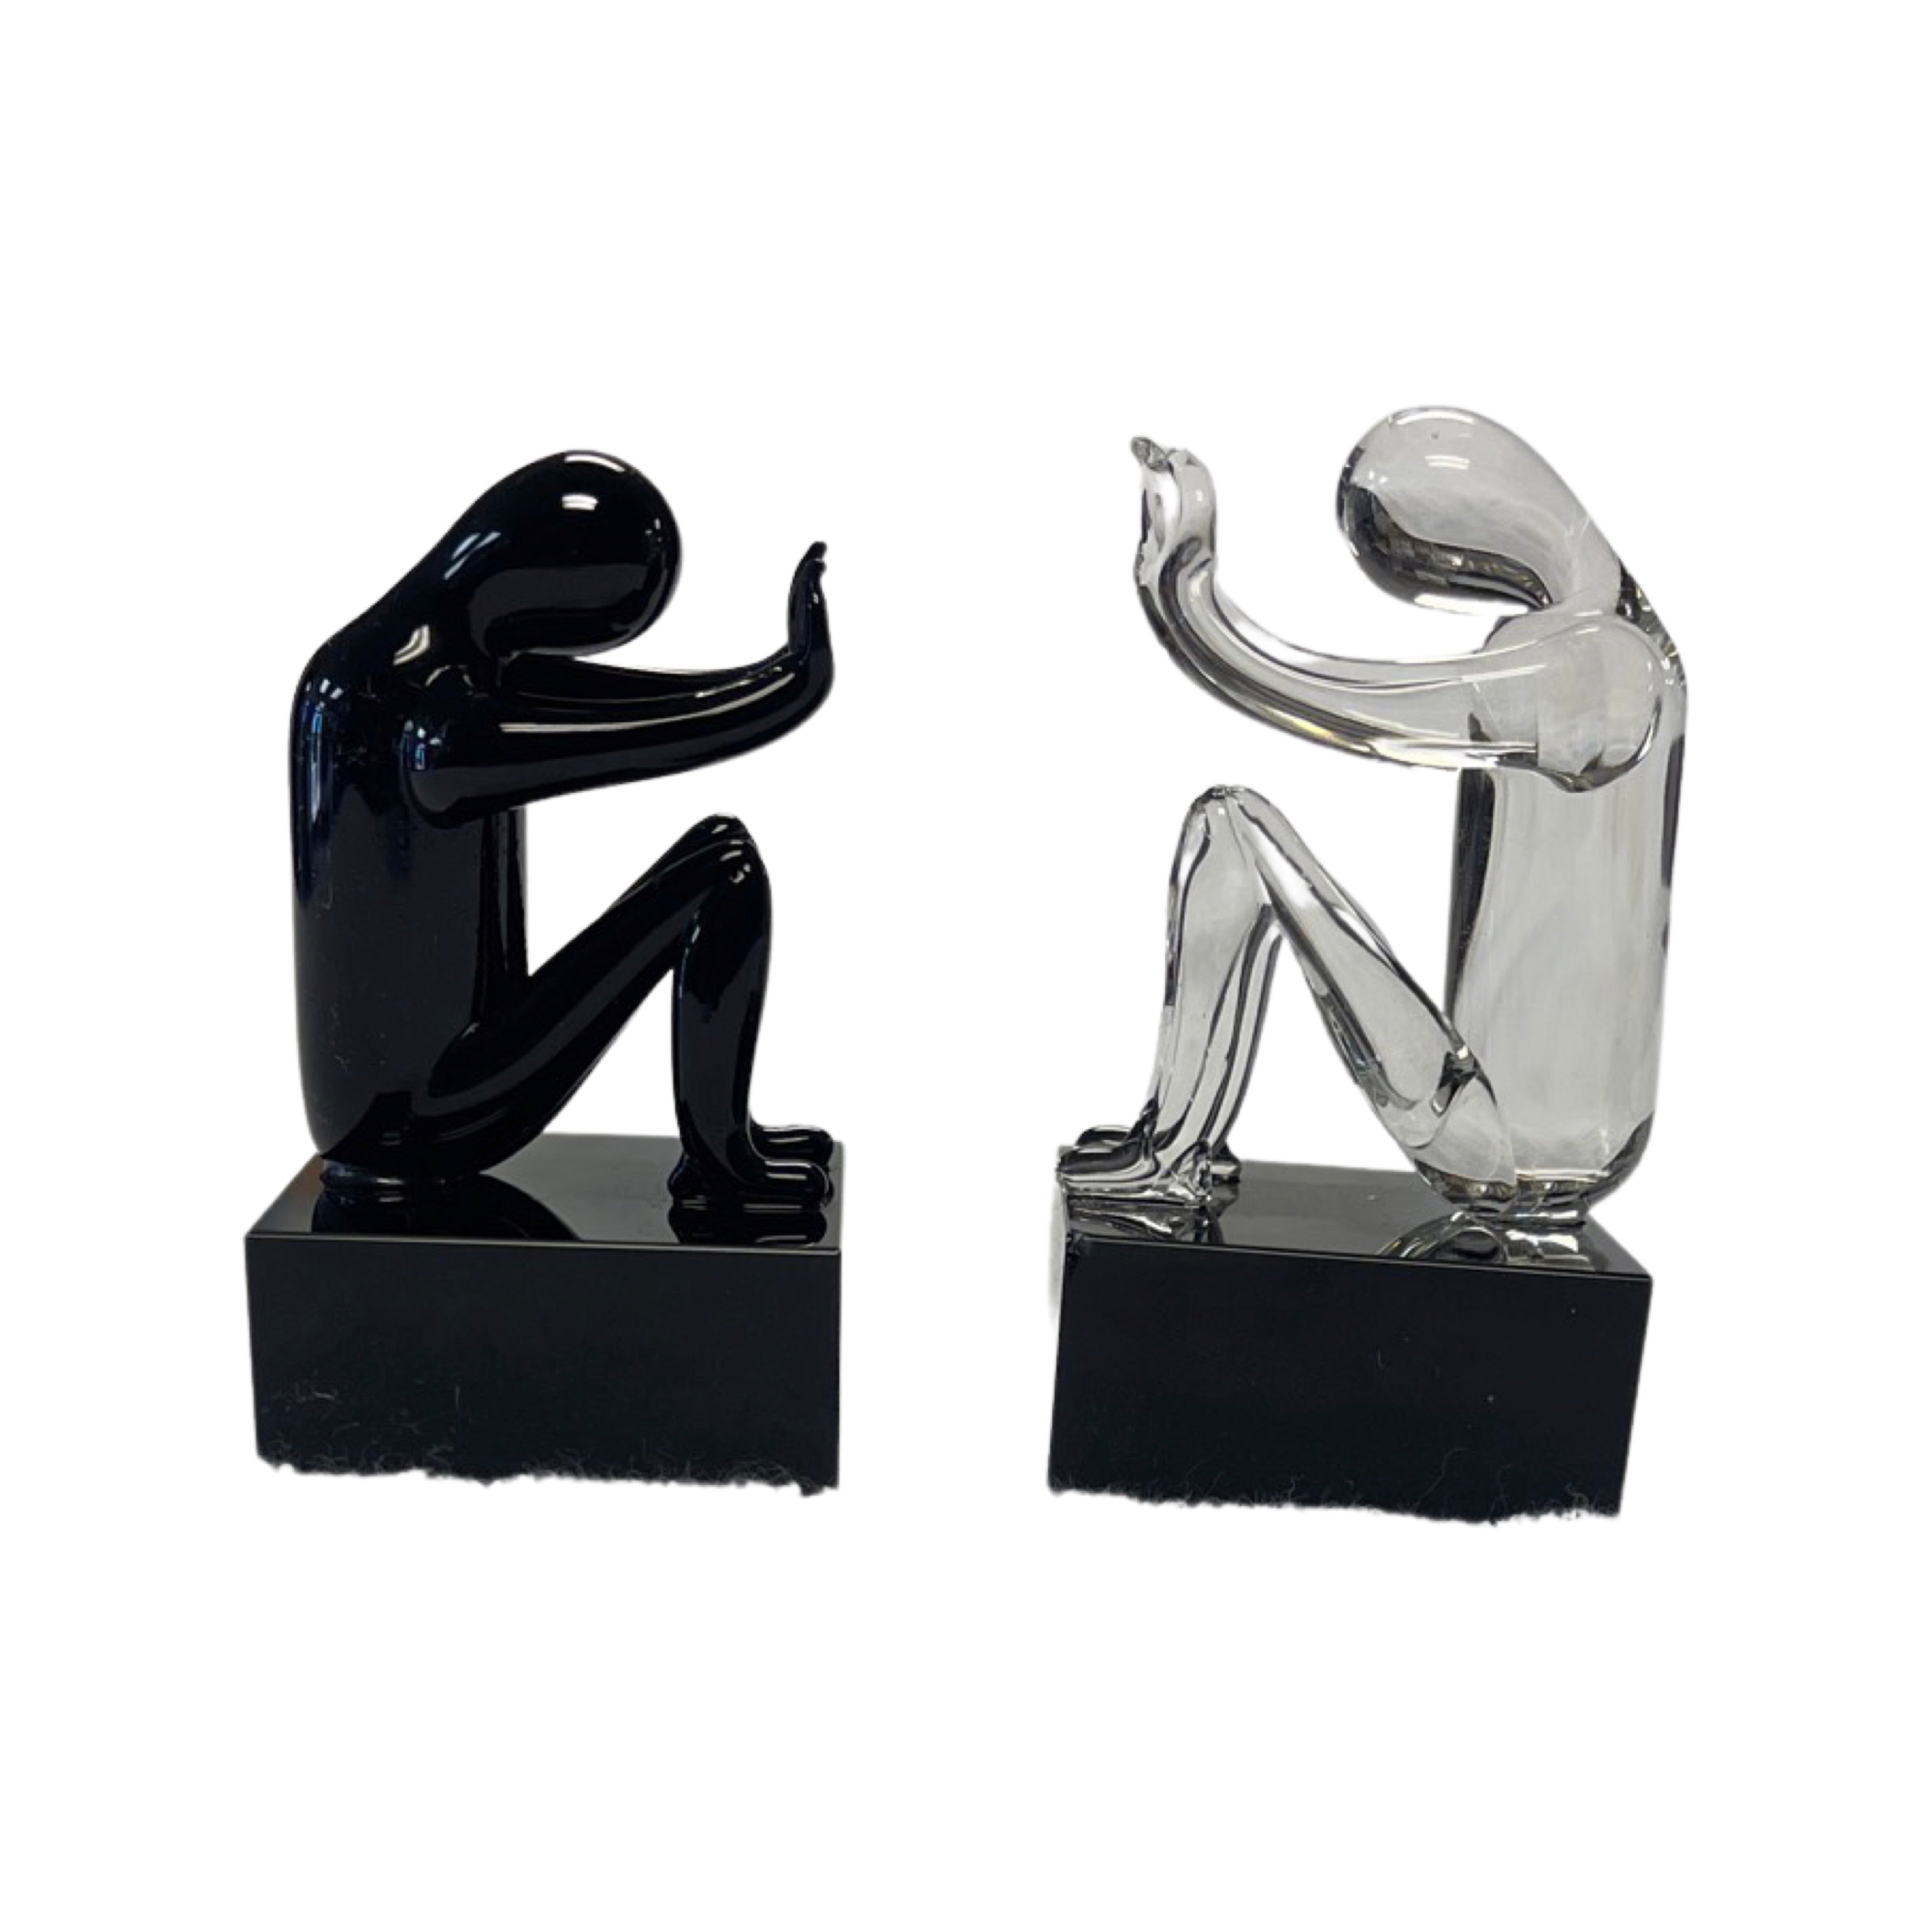 Linen Universe Black & White Glass Sculpture Set - 2" x 3" x 2"